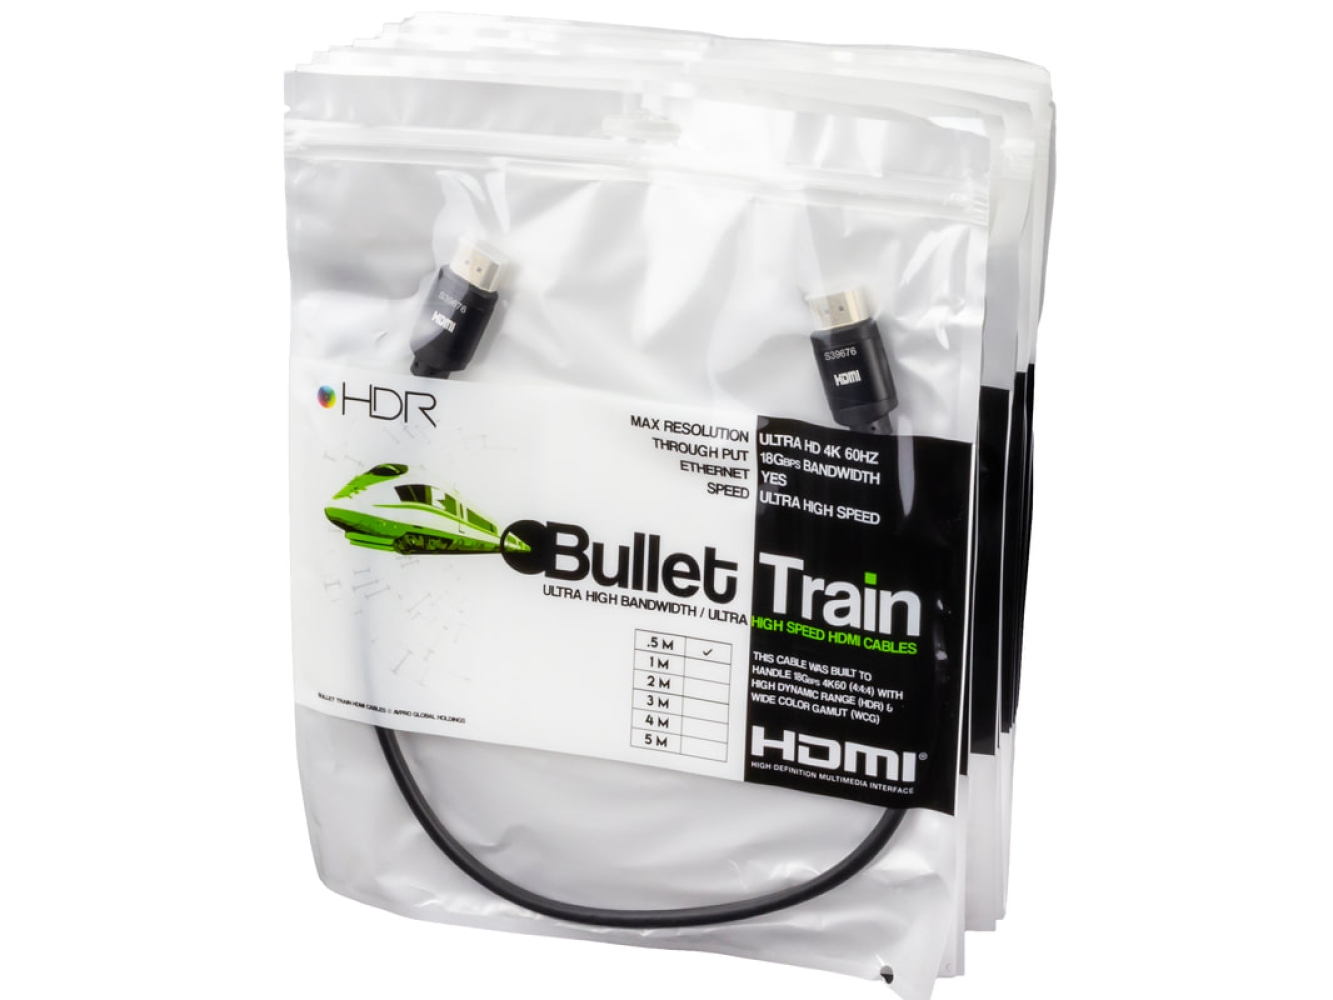 Bullet Train AC-BTJUMP-AUHD